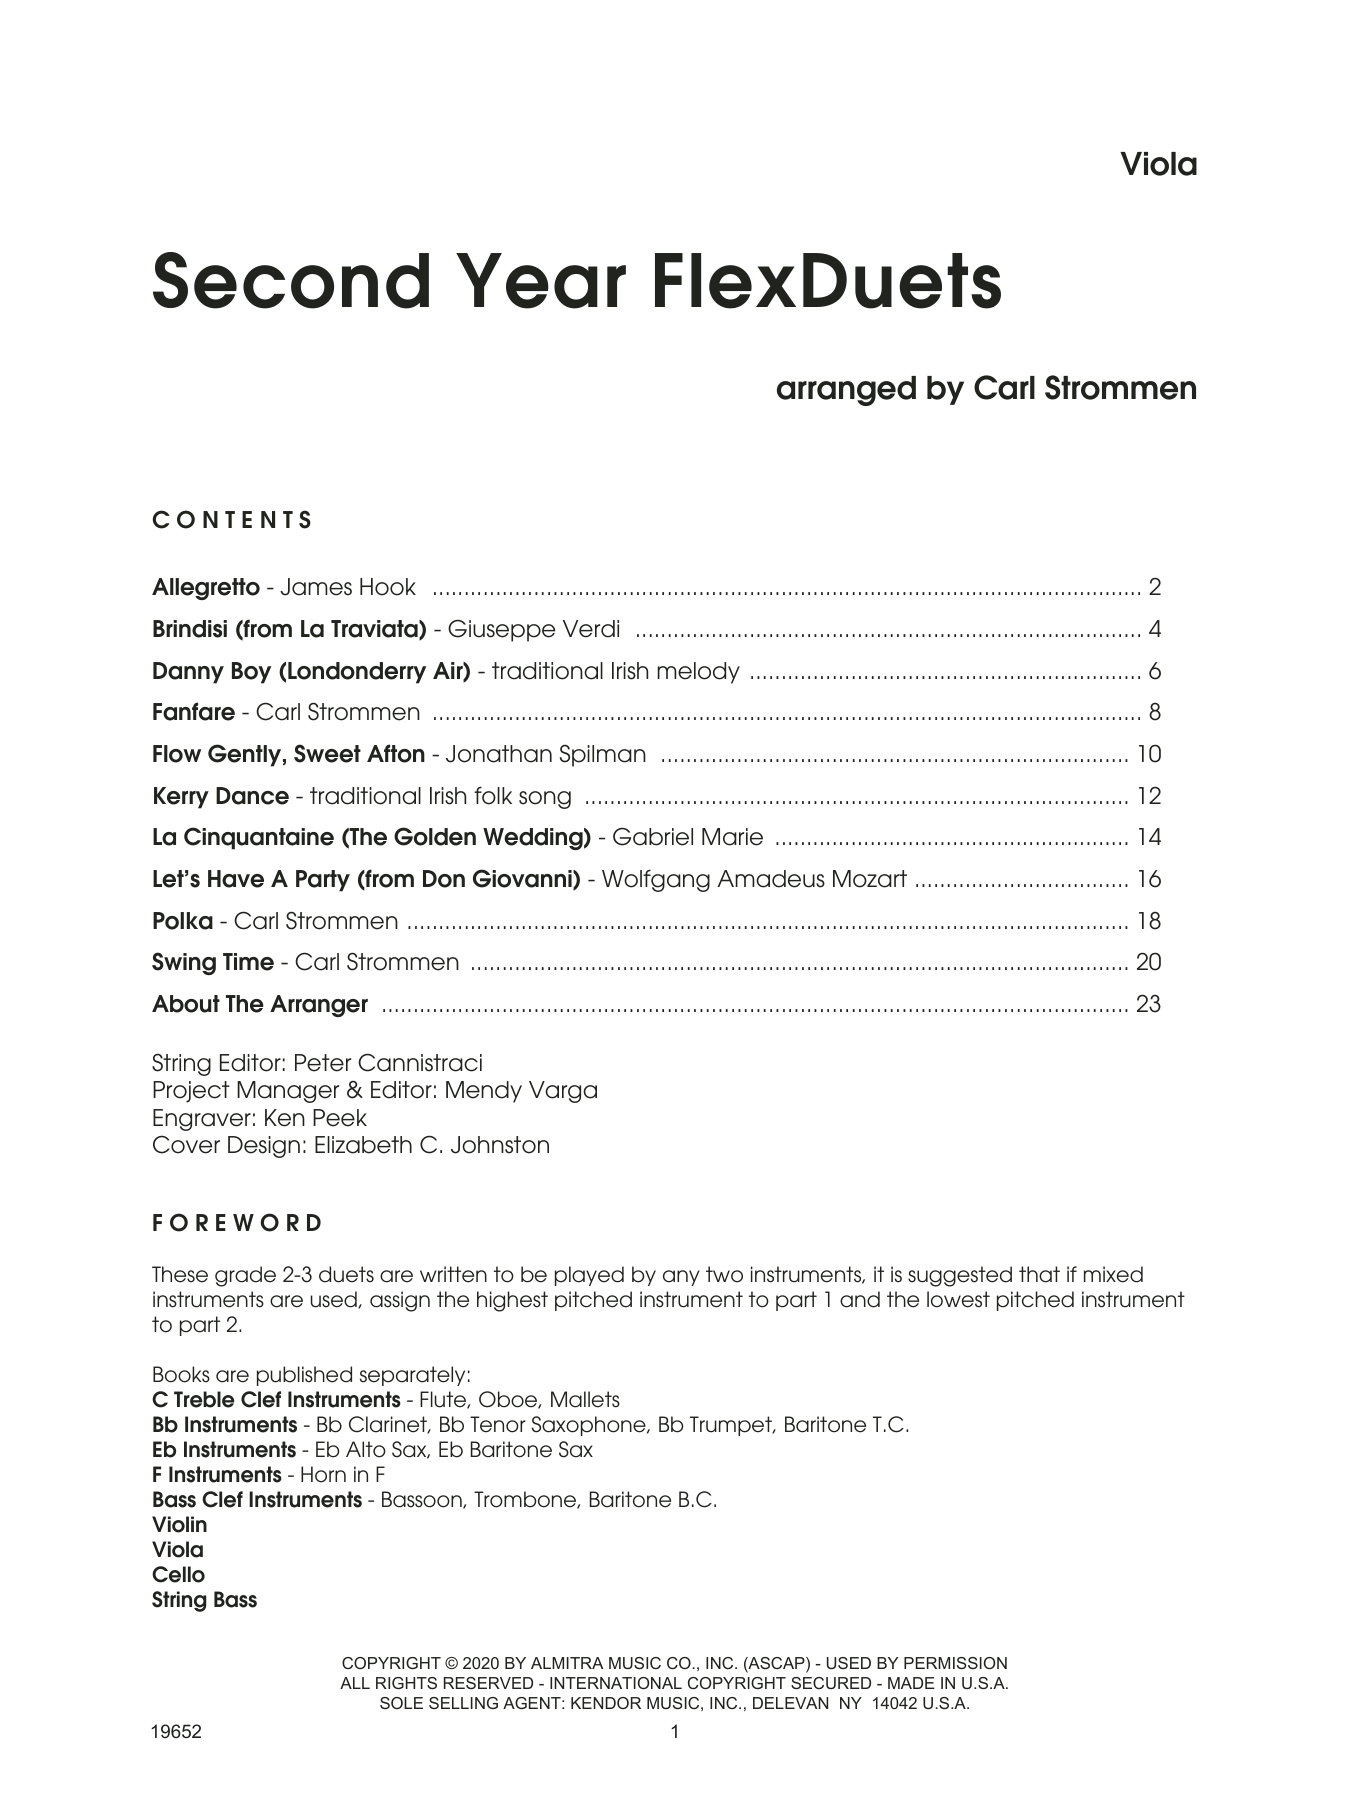 Download Carl Strommen Second Year FlexDuets - Viola Sheet Music